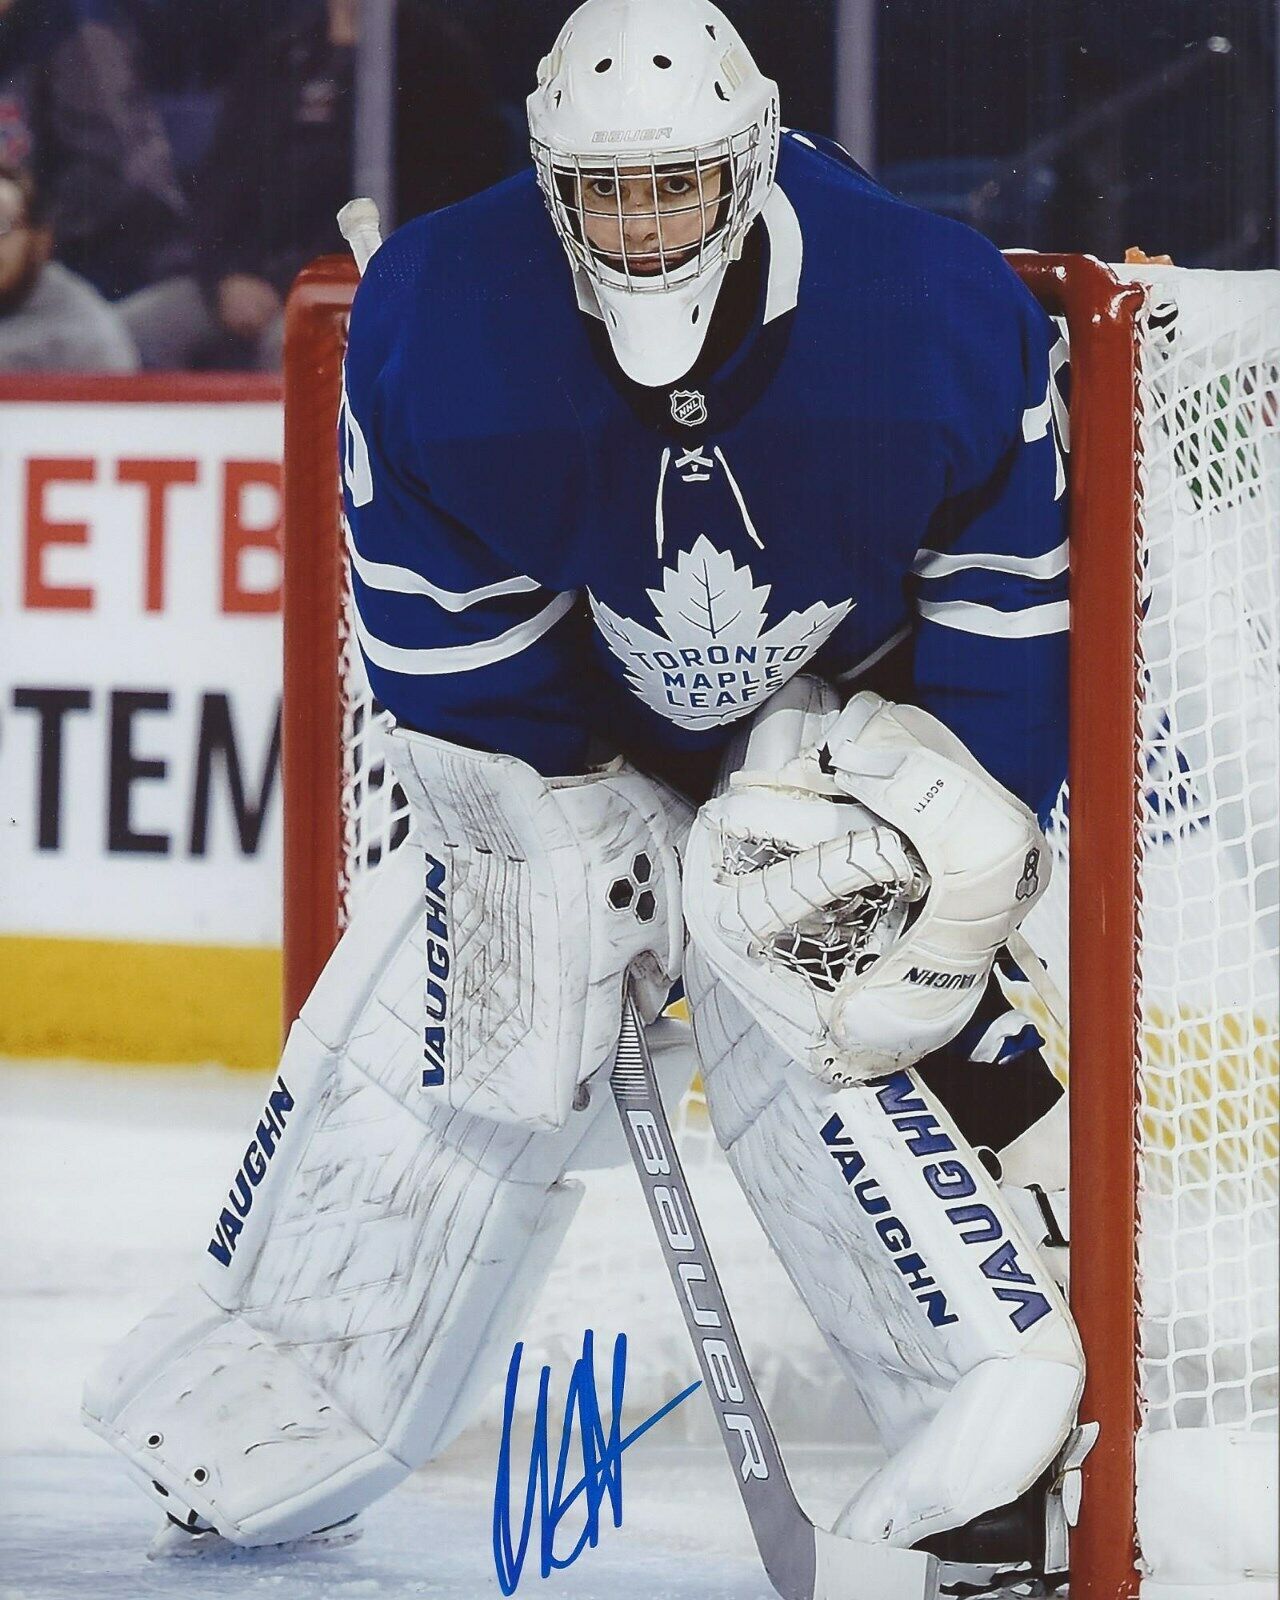 Ian Scott Signed 8x10 Photo Poster painting Toronto Maple Leafs Autographed COA B